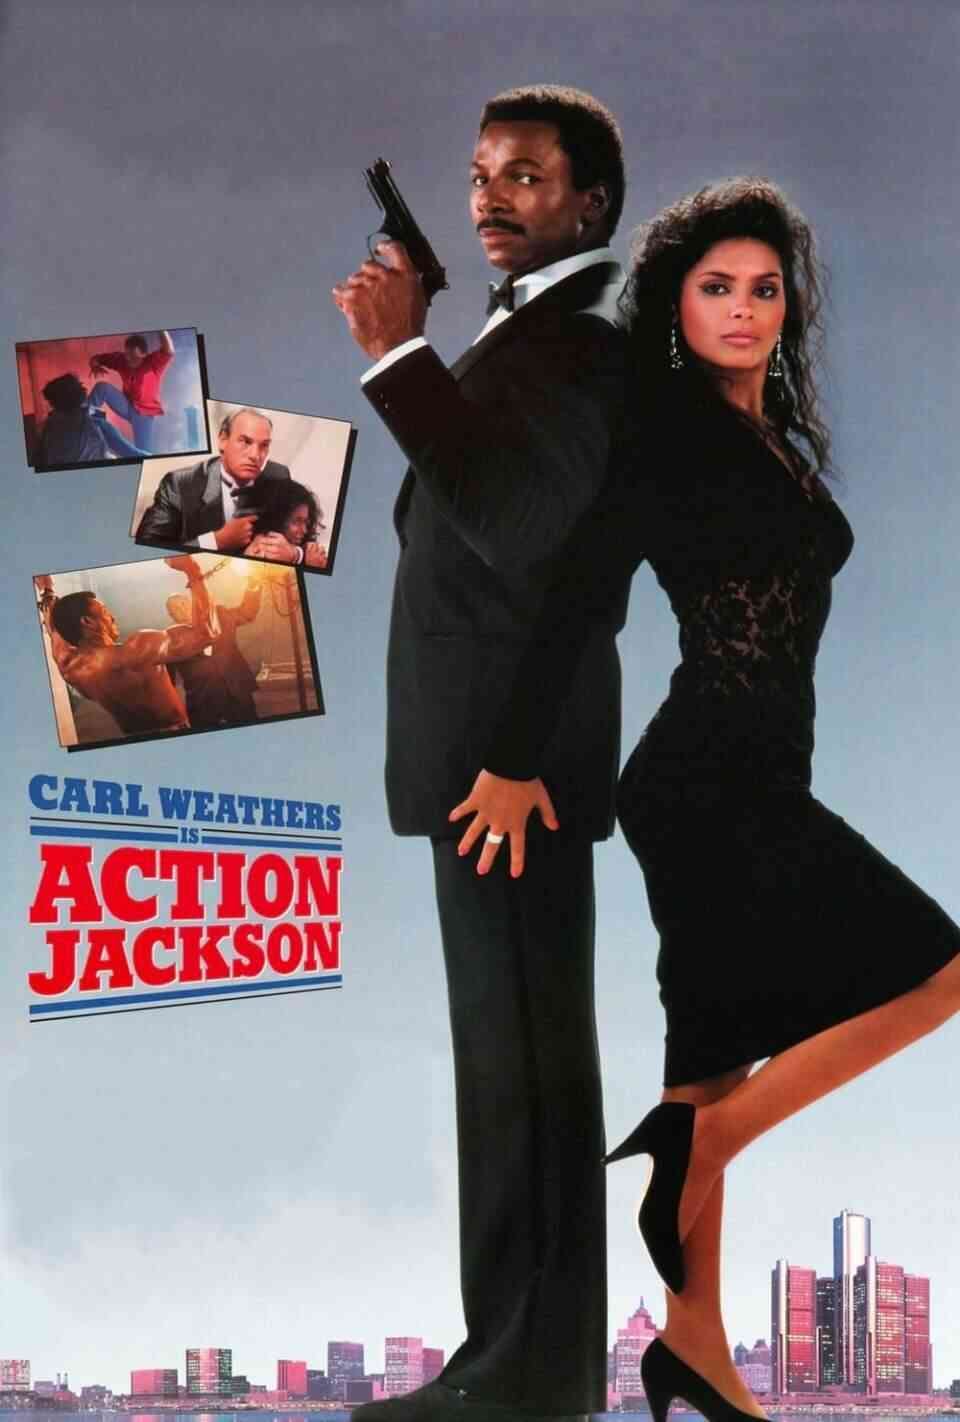 Read Action Jackson screenplay.